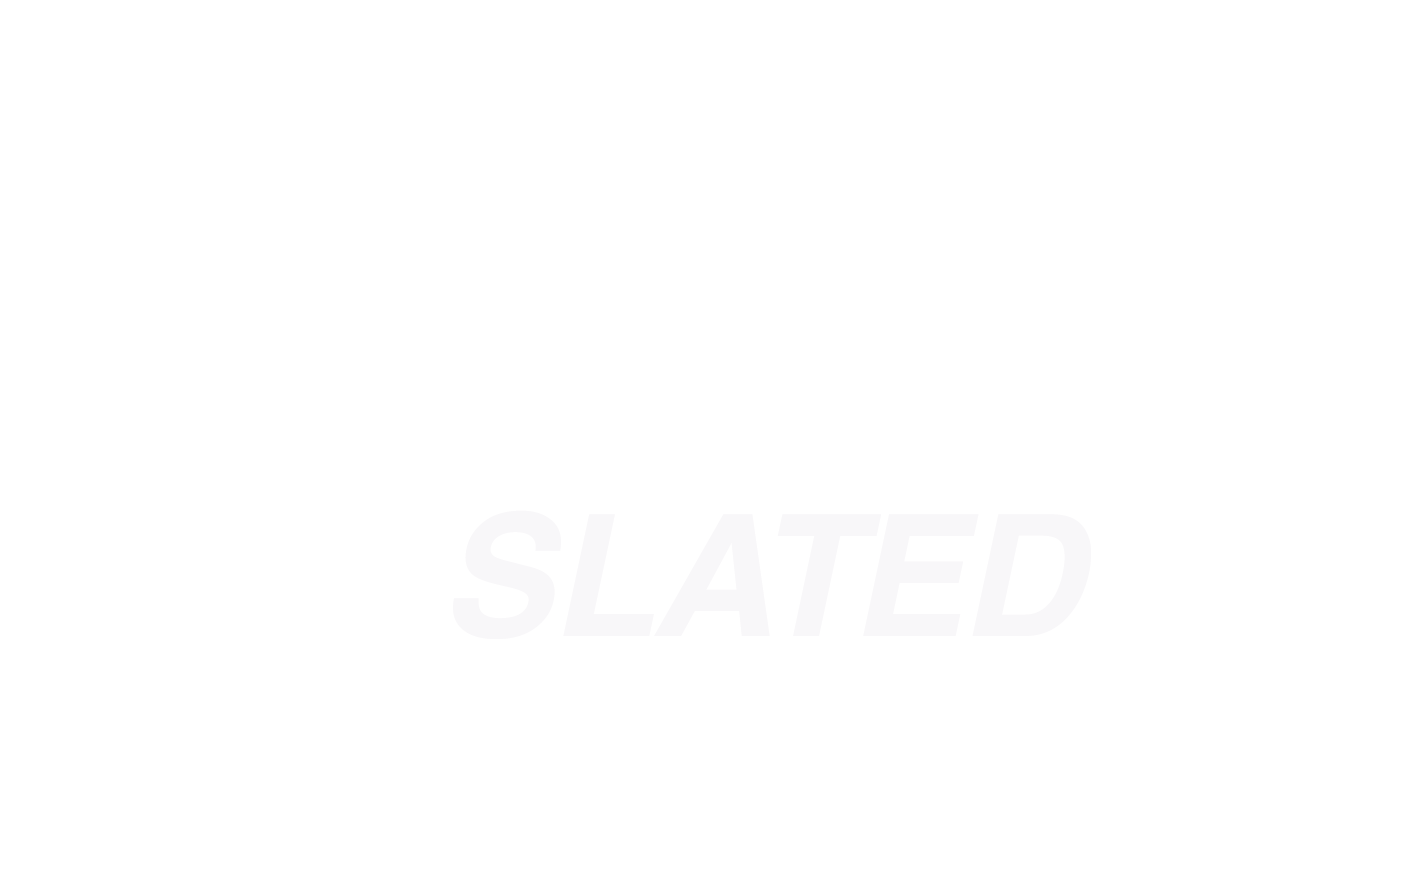 Slated---vision.com